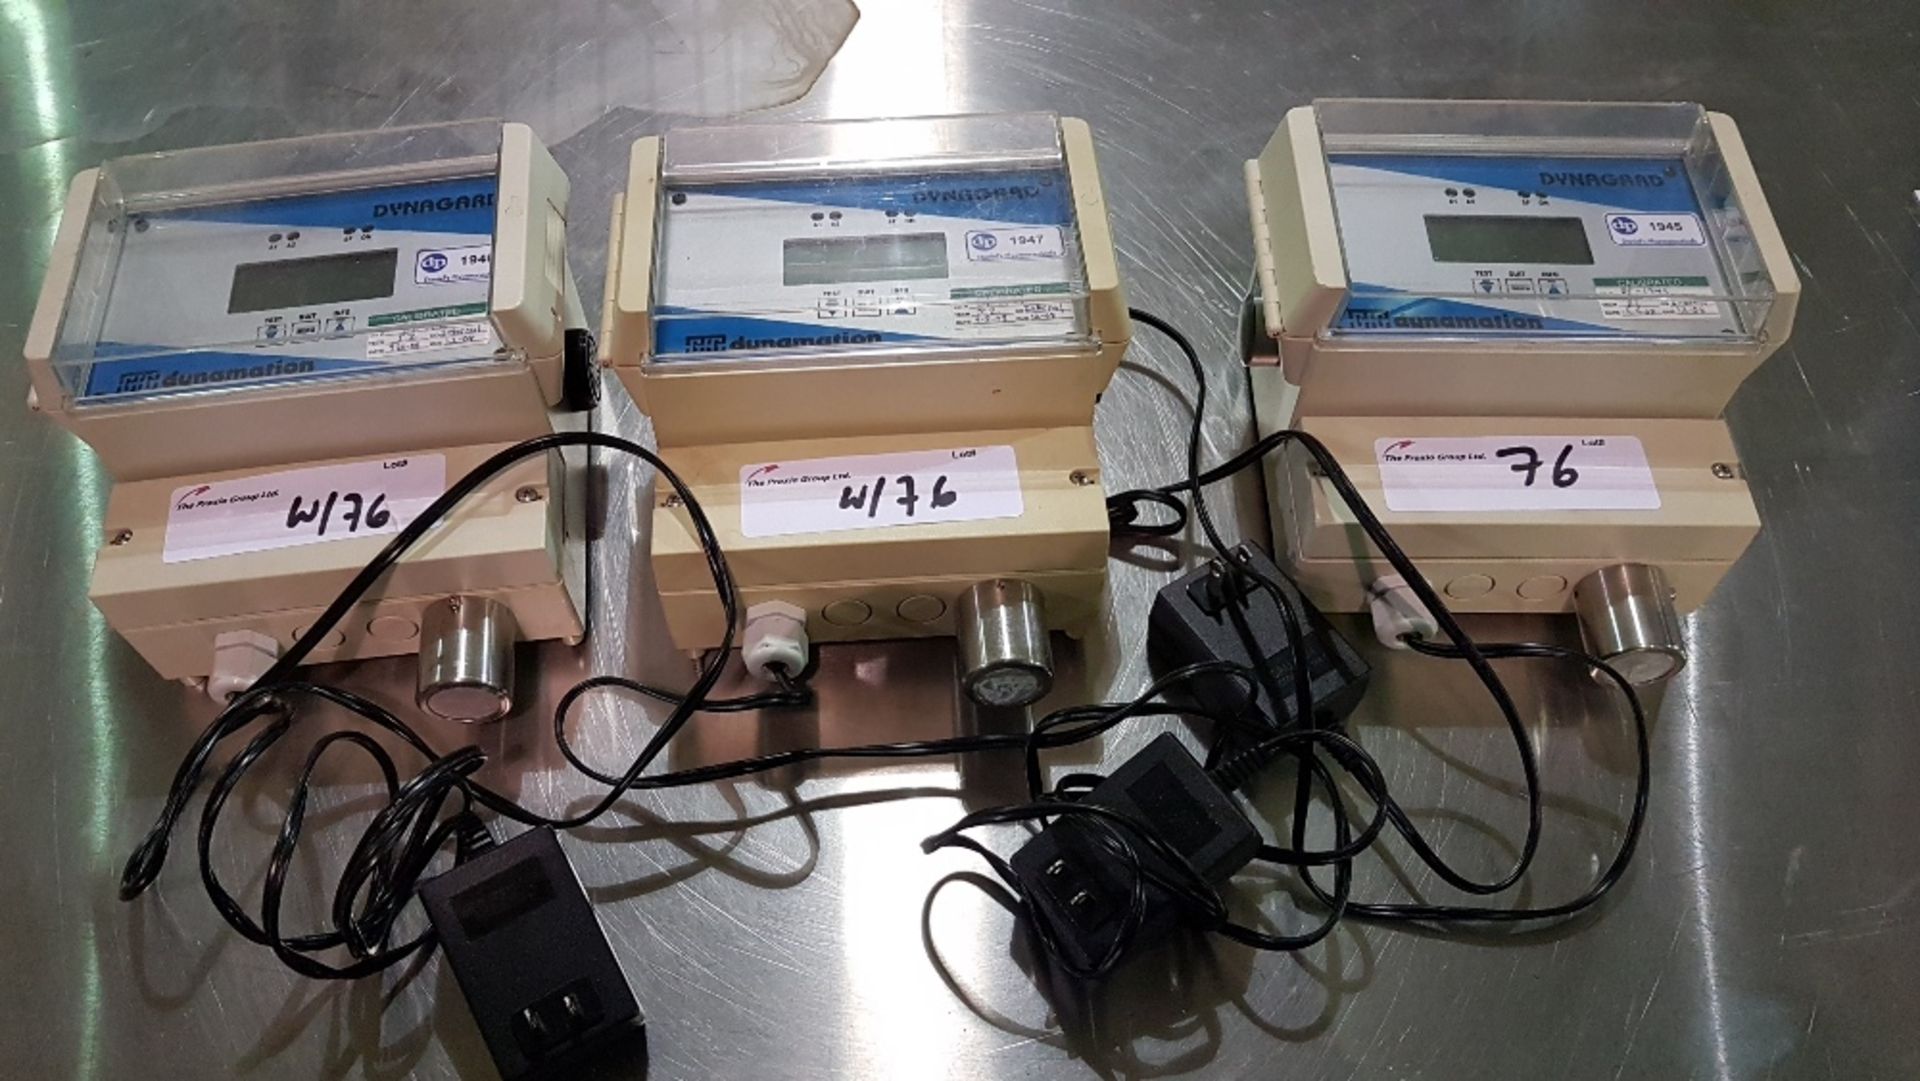 Lot of (3) Dynaguard II oxygen monitors, with manuals